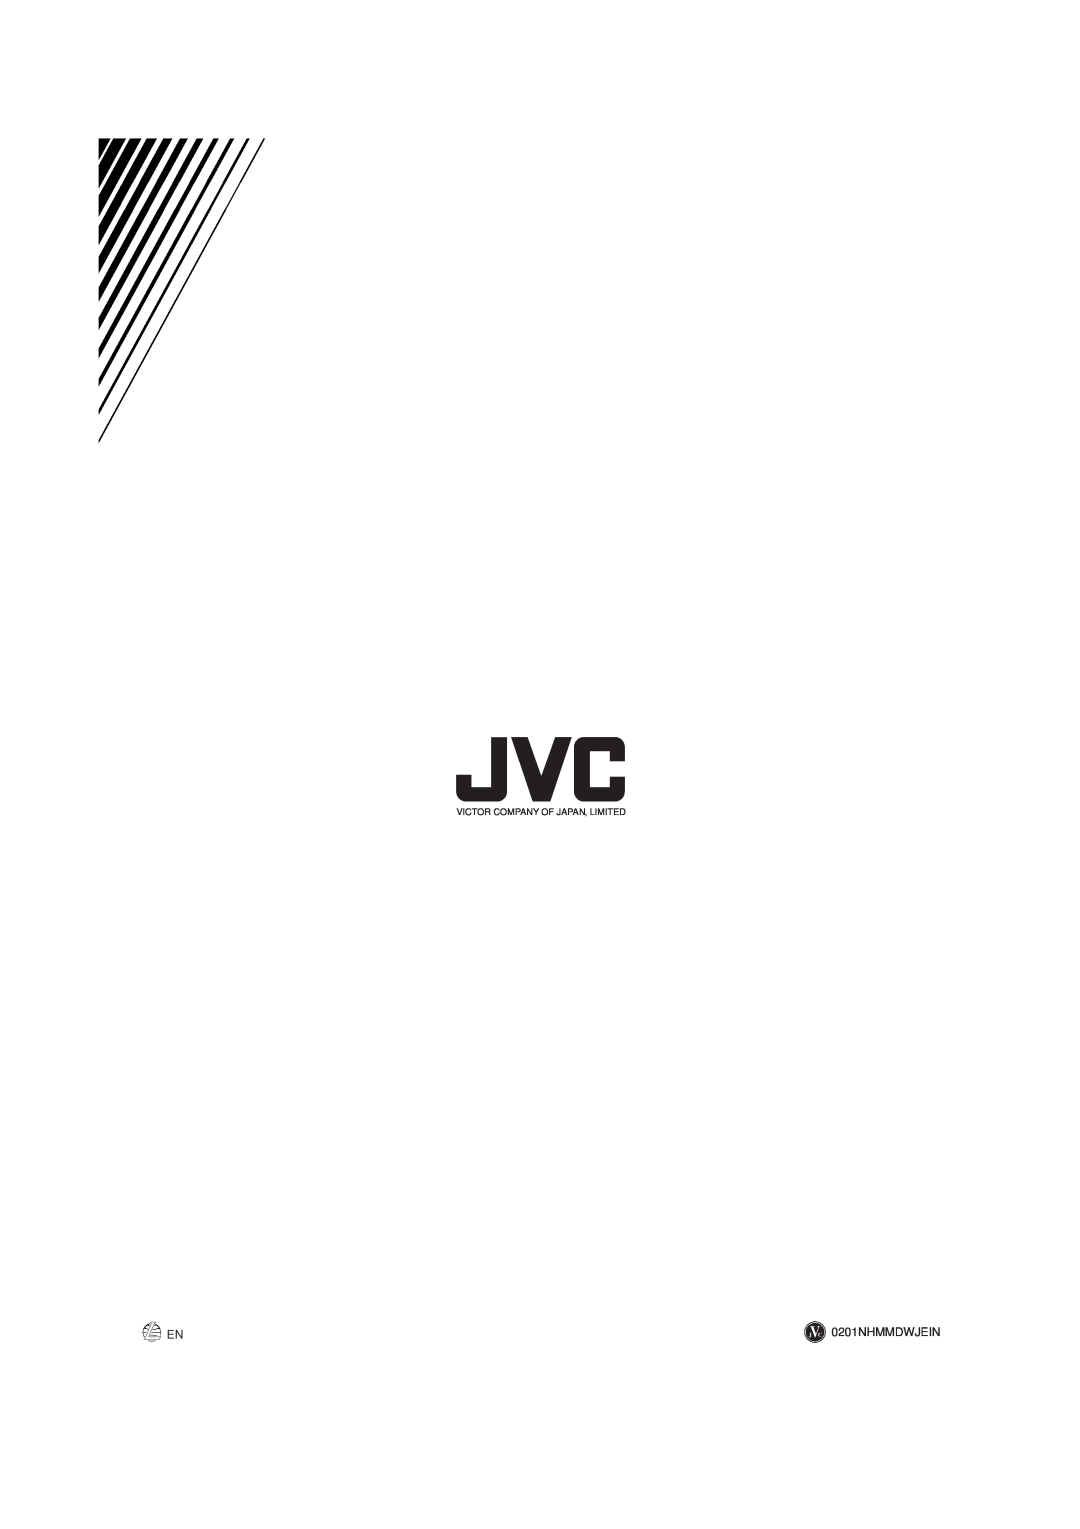 JVC RX-9010VBK manual 0201NHMMDWJEIN, Victor Company Of Japan, Limited 